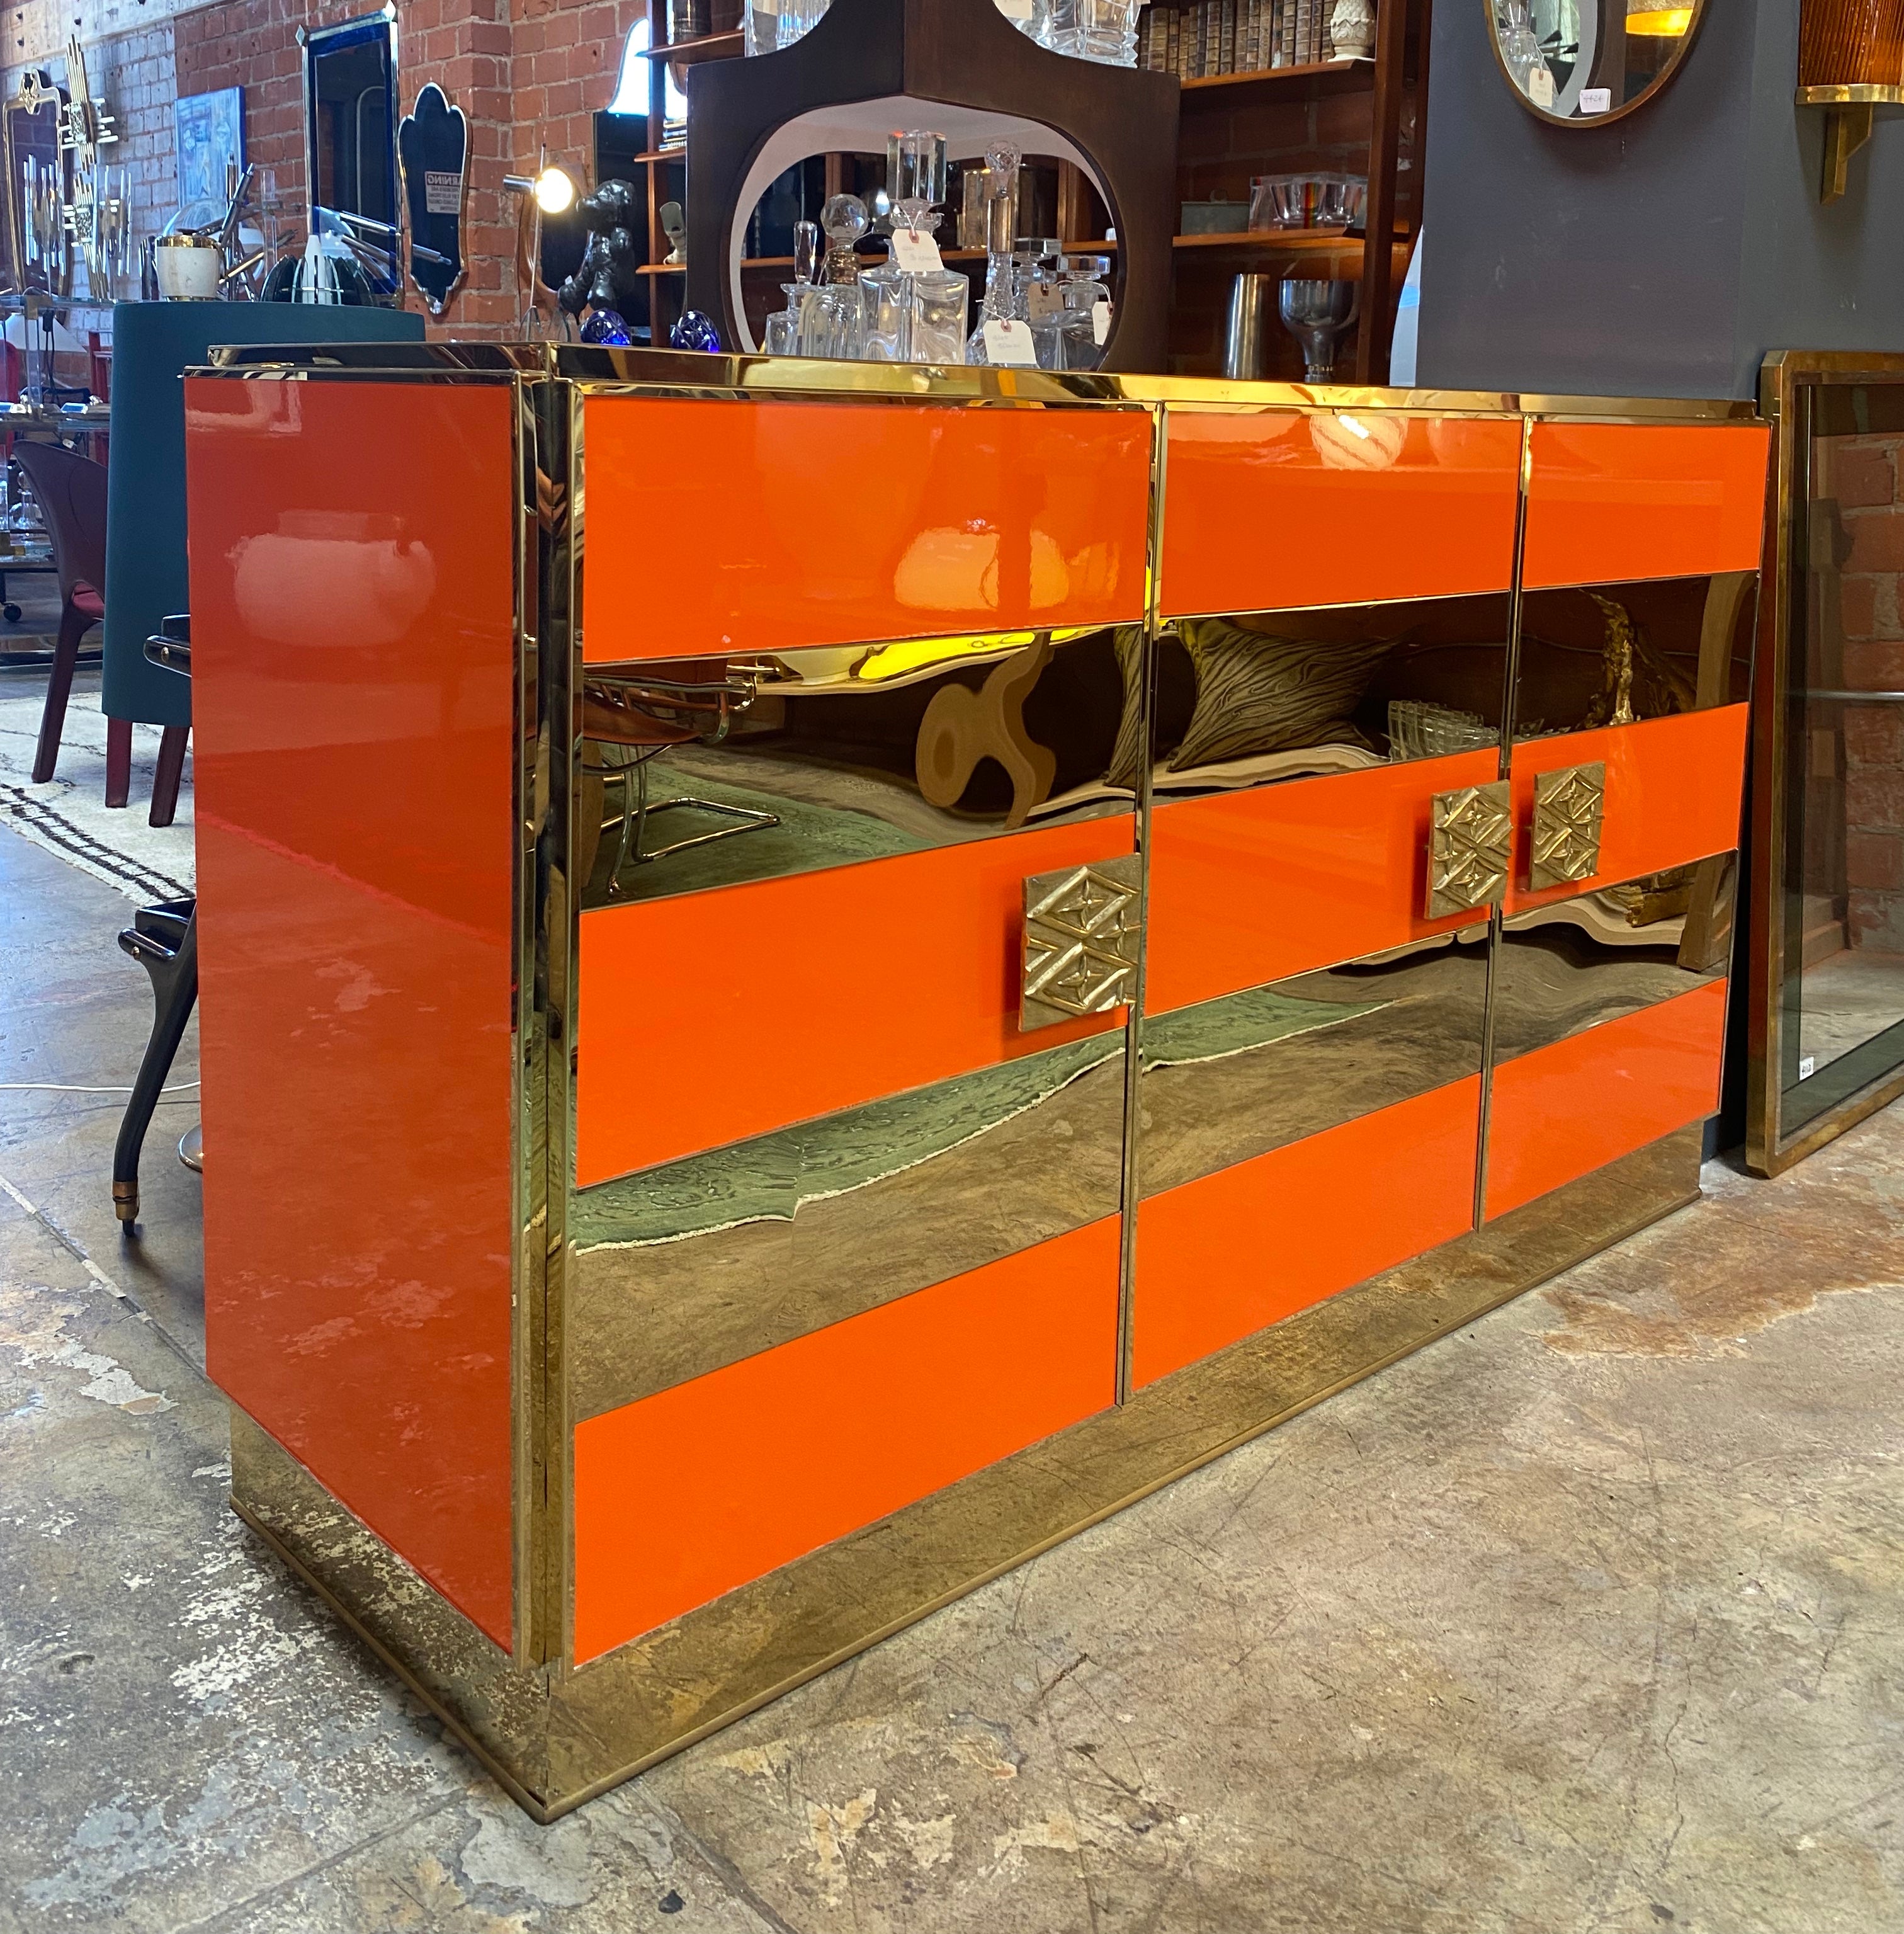 1970s Italian Art Deco Orange Cabinet / Credenza